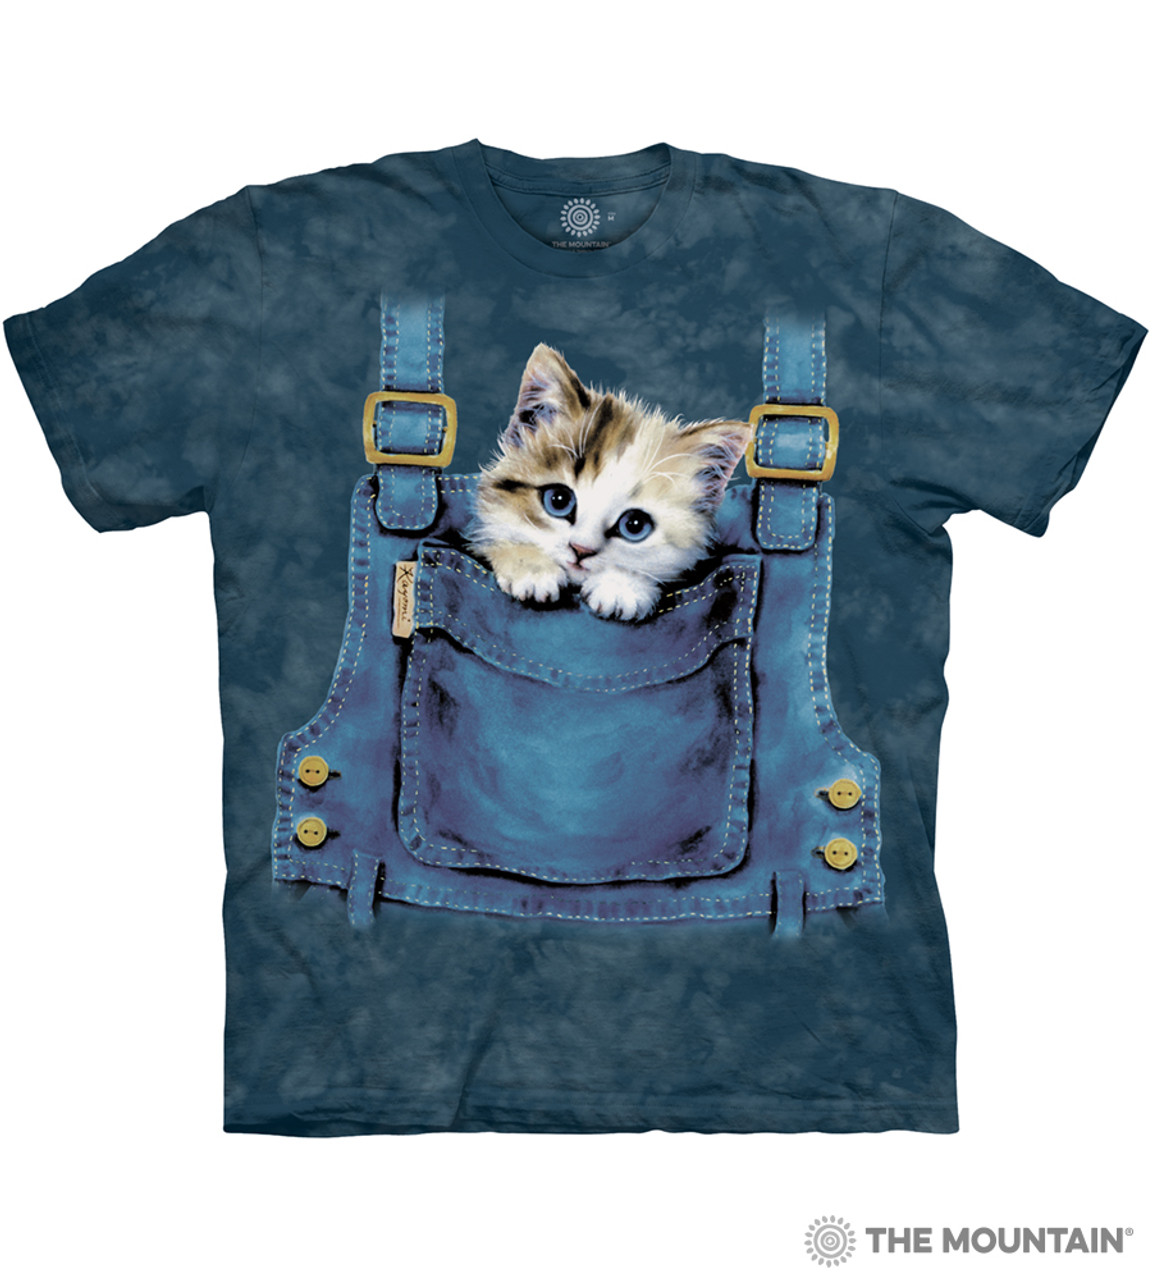 Ezer Fordulj Meg Szaz T Shirt And Overall Sitomarino Net - aesthetic overalls roblox t shirt